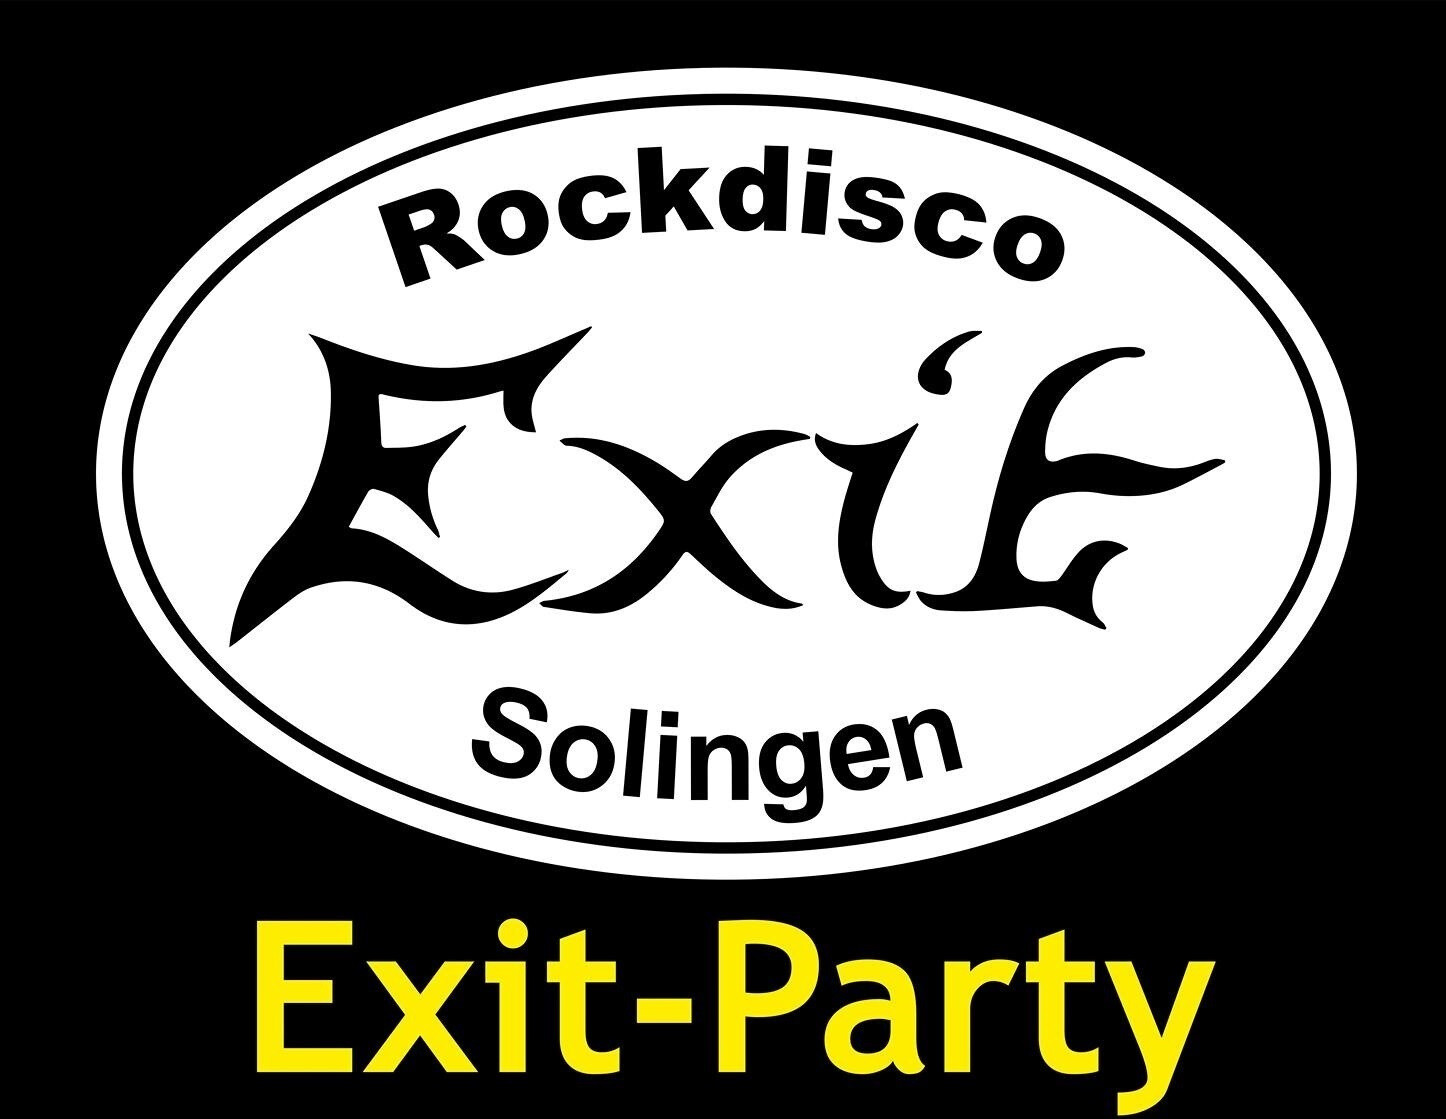 "Wappen" der "Rockdisco - Exit - Solingen  > Exit-Party"